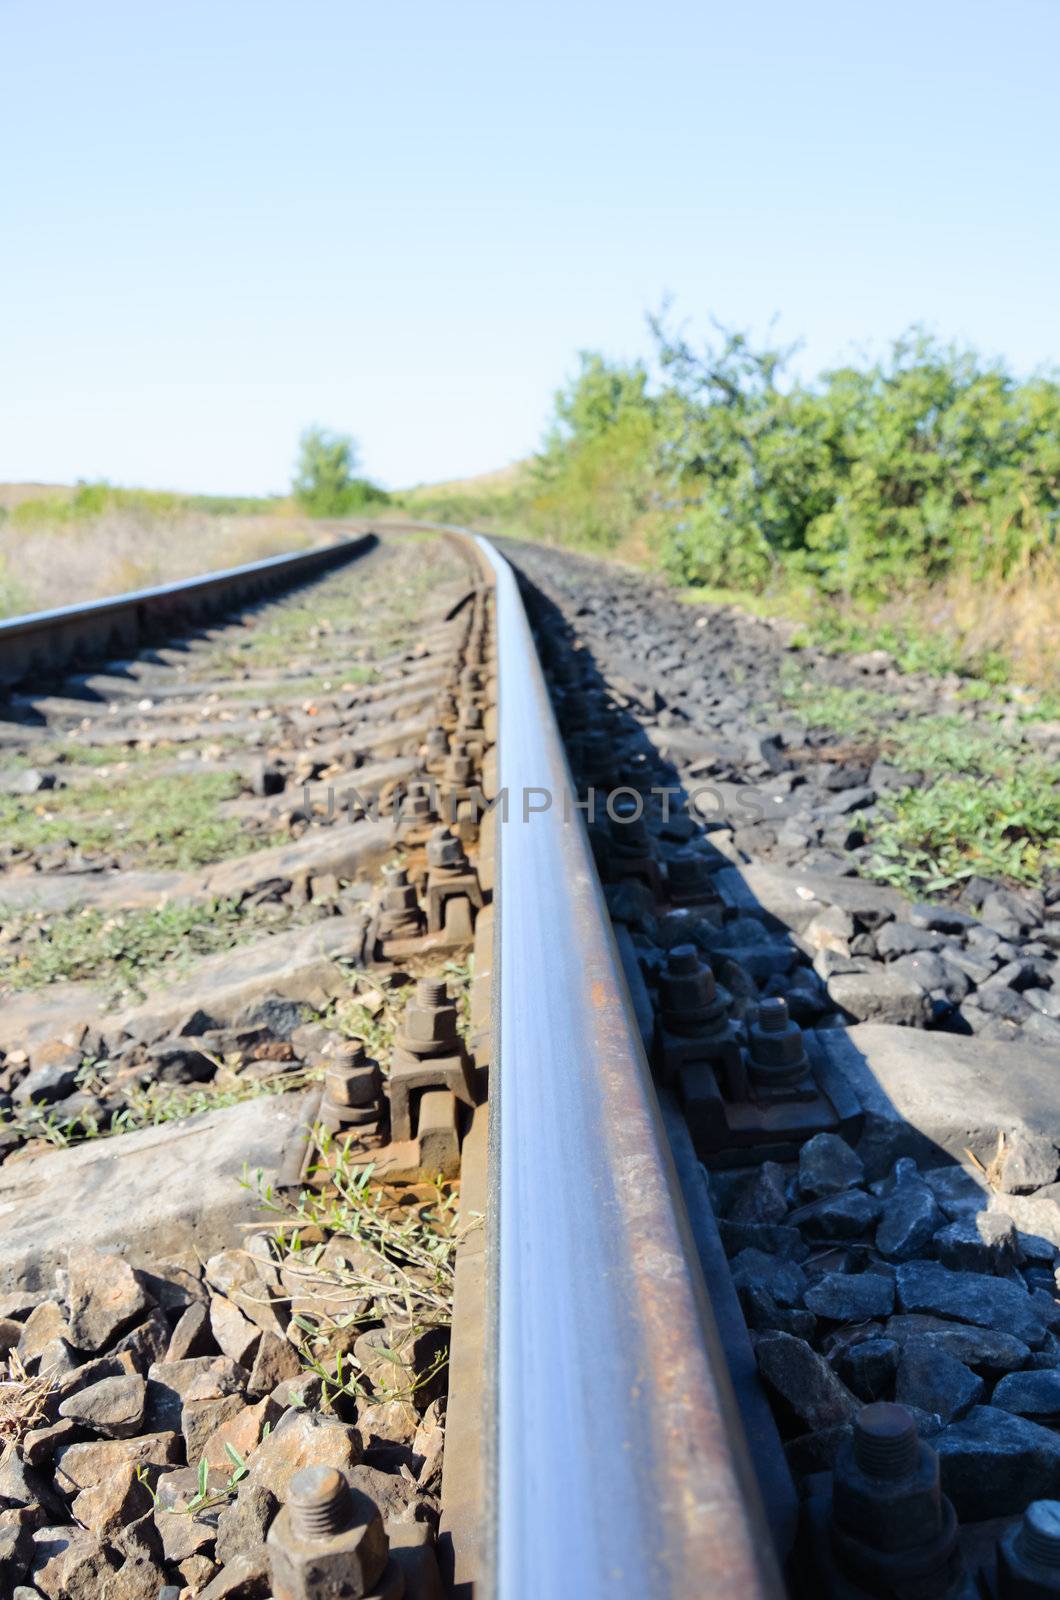 Railway track  cutting through rural countryside in summer